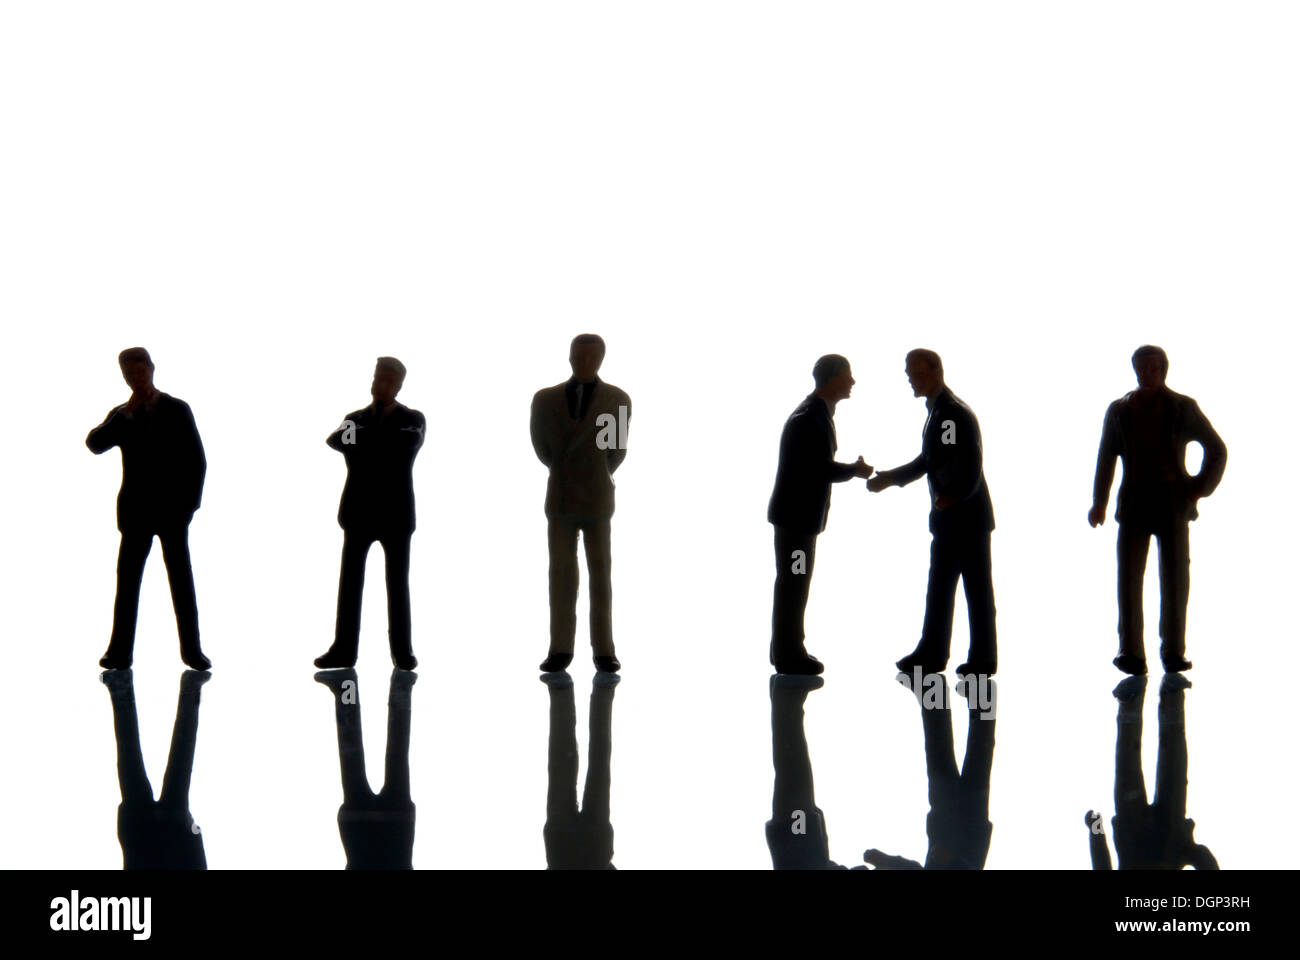 Row of businessmen figures, silhouettes Stock Photo